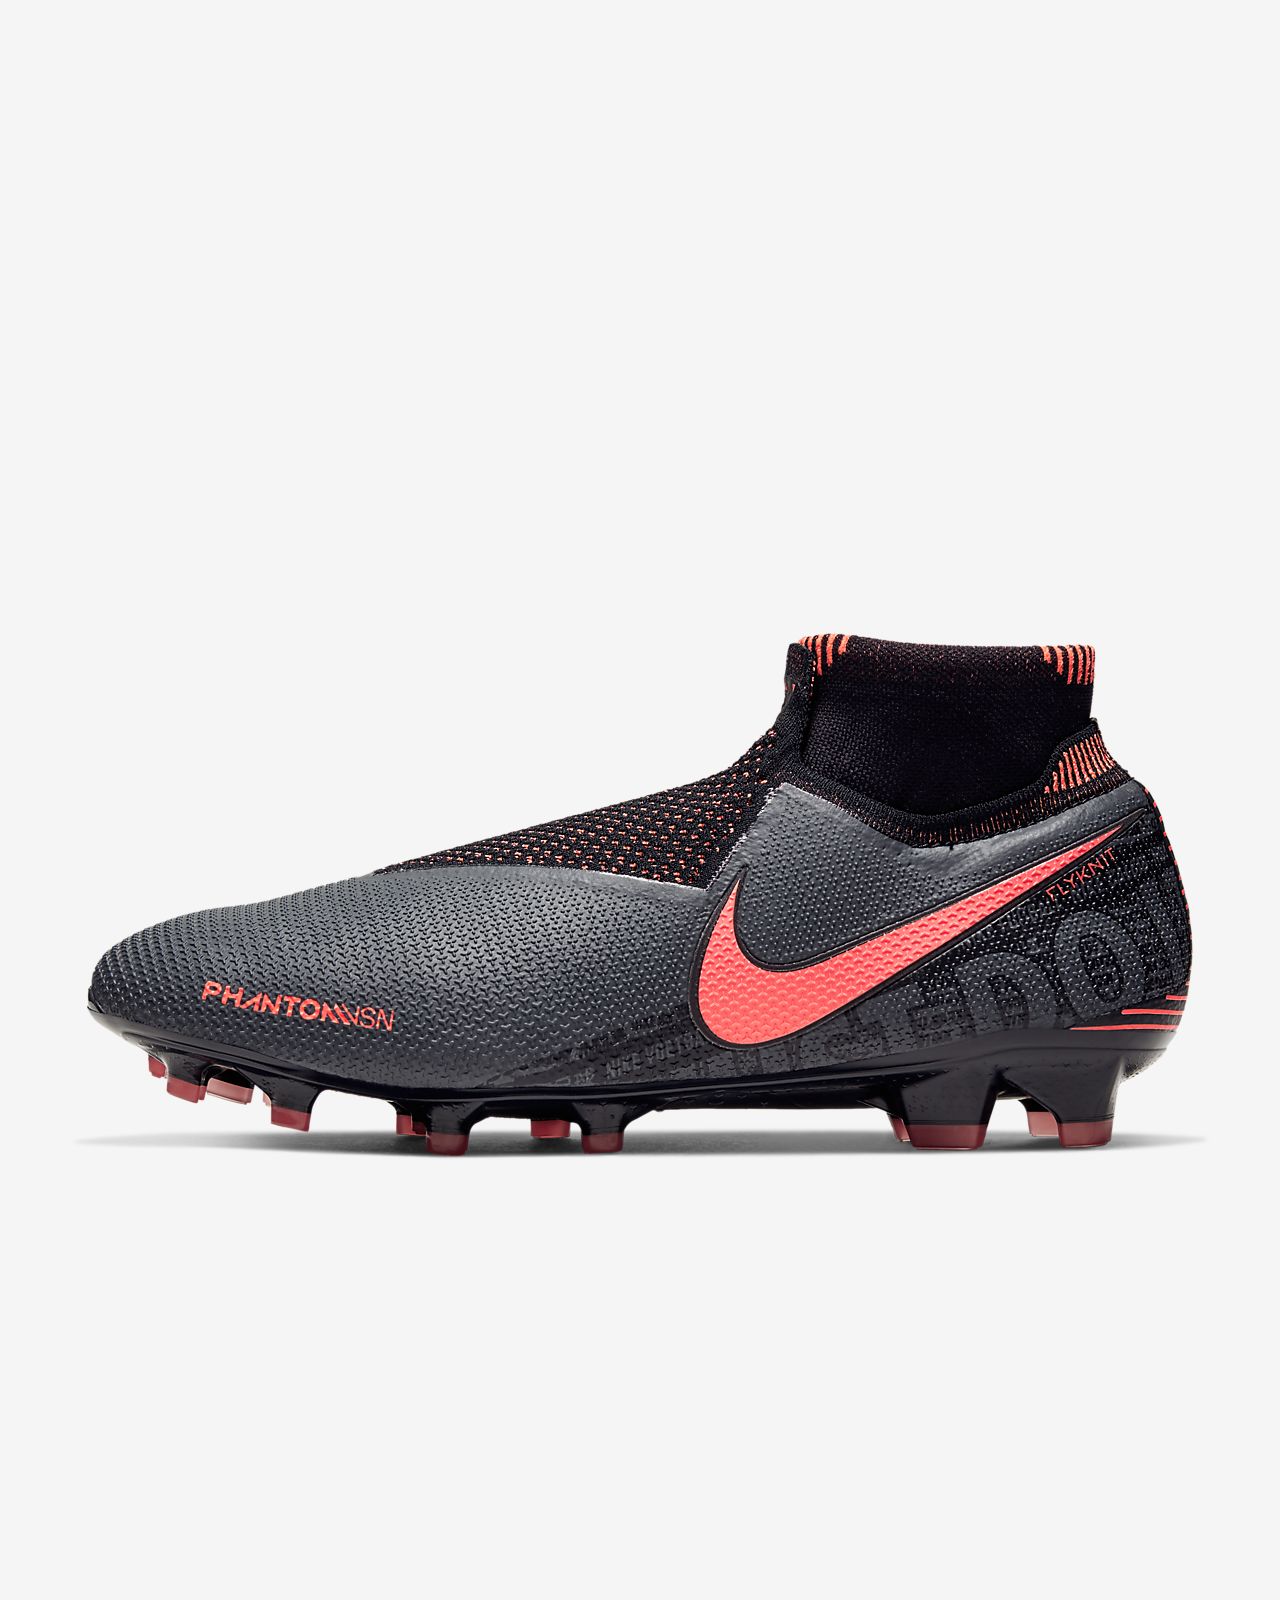 2019 nike football boots